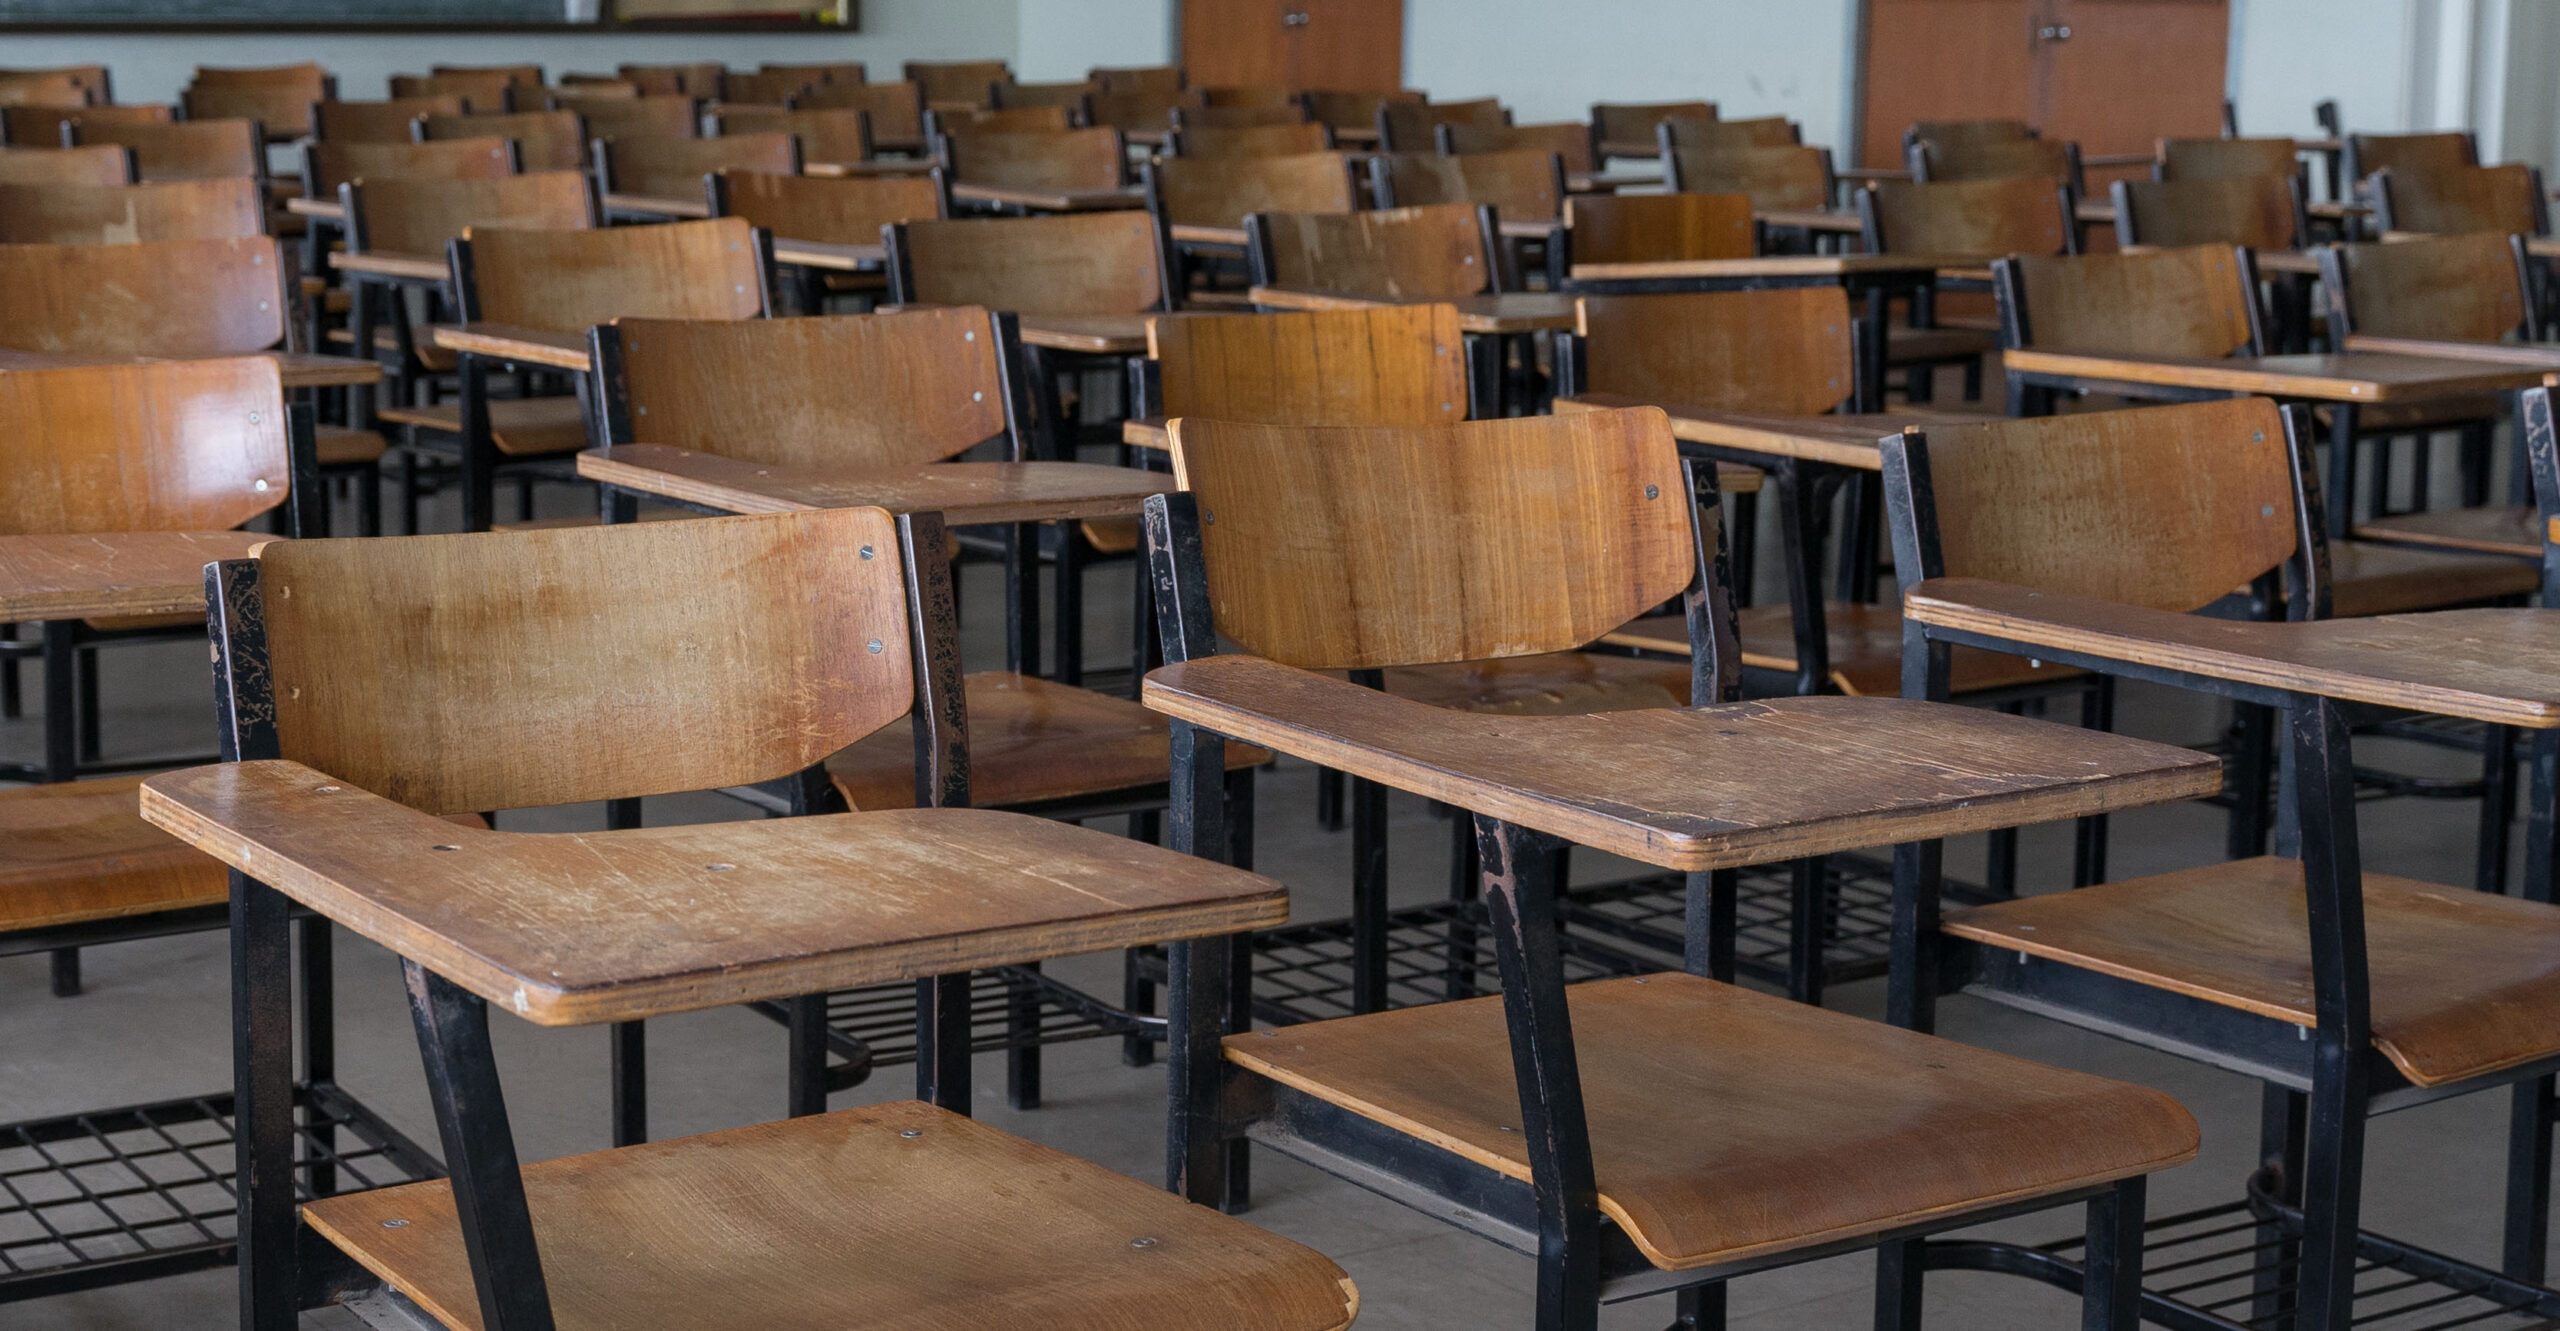 Despite Being Closed, San Diego Schools Descend Into Wokeness